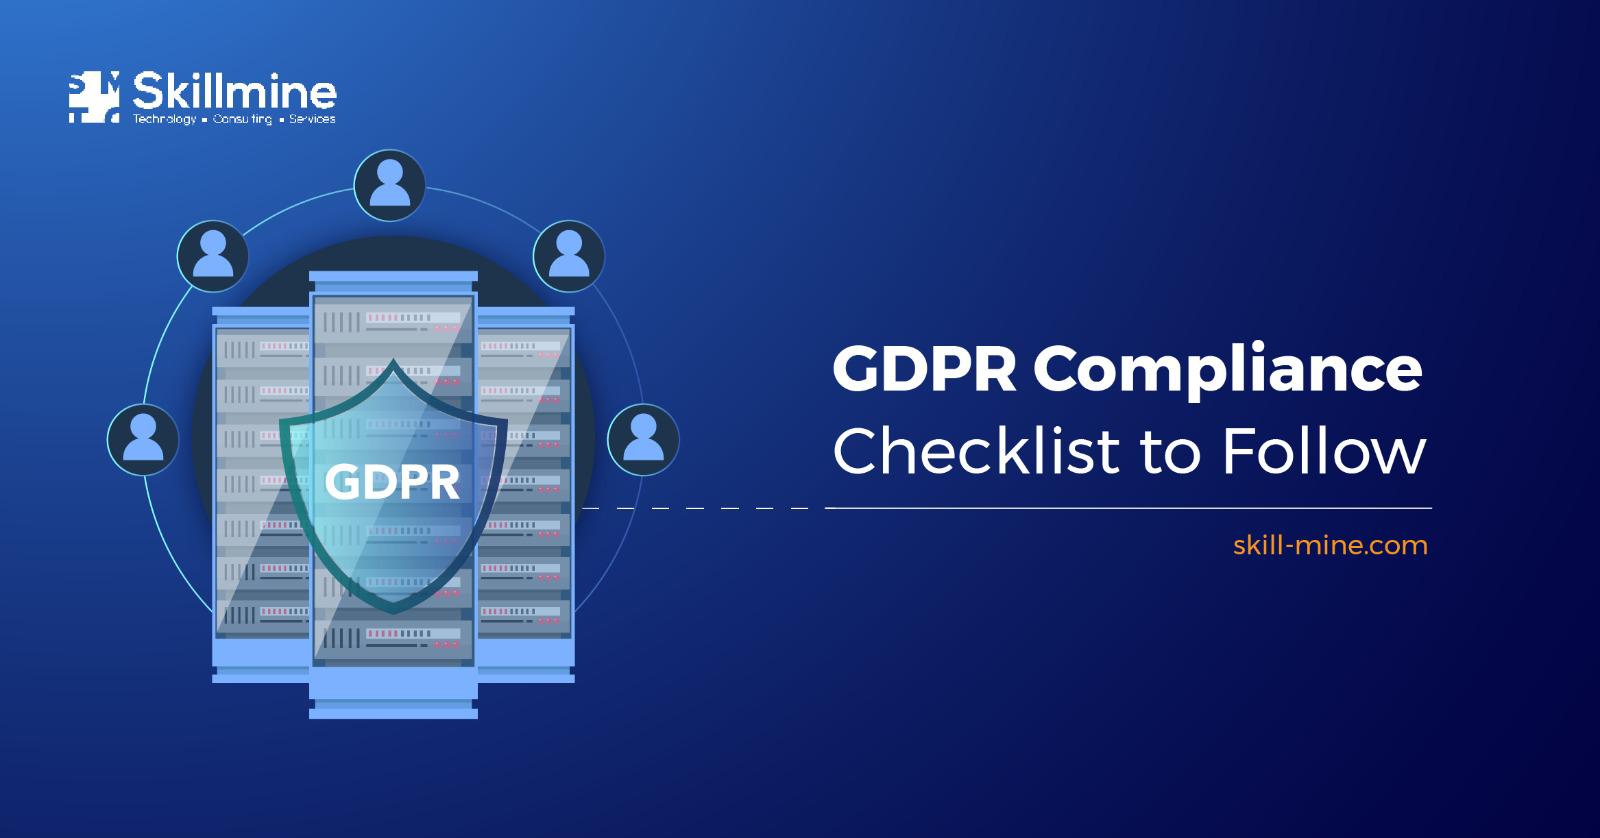 GDPR Compliance Checklist to Follow